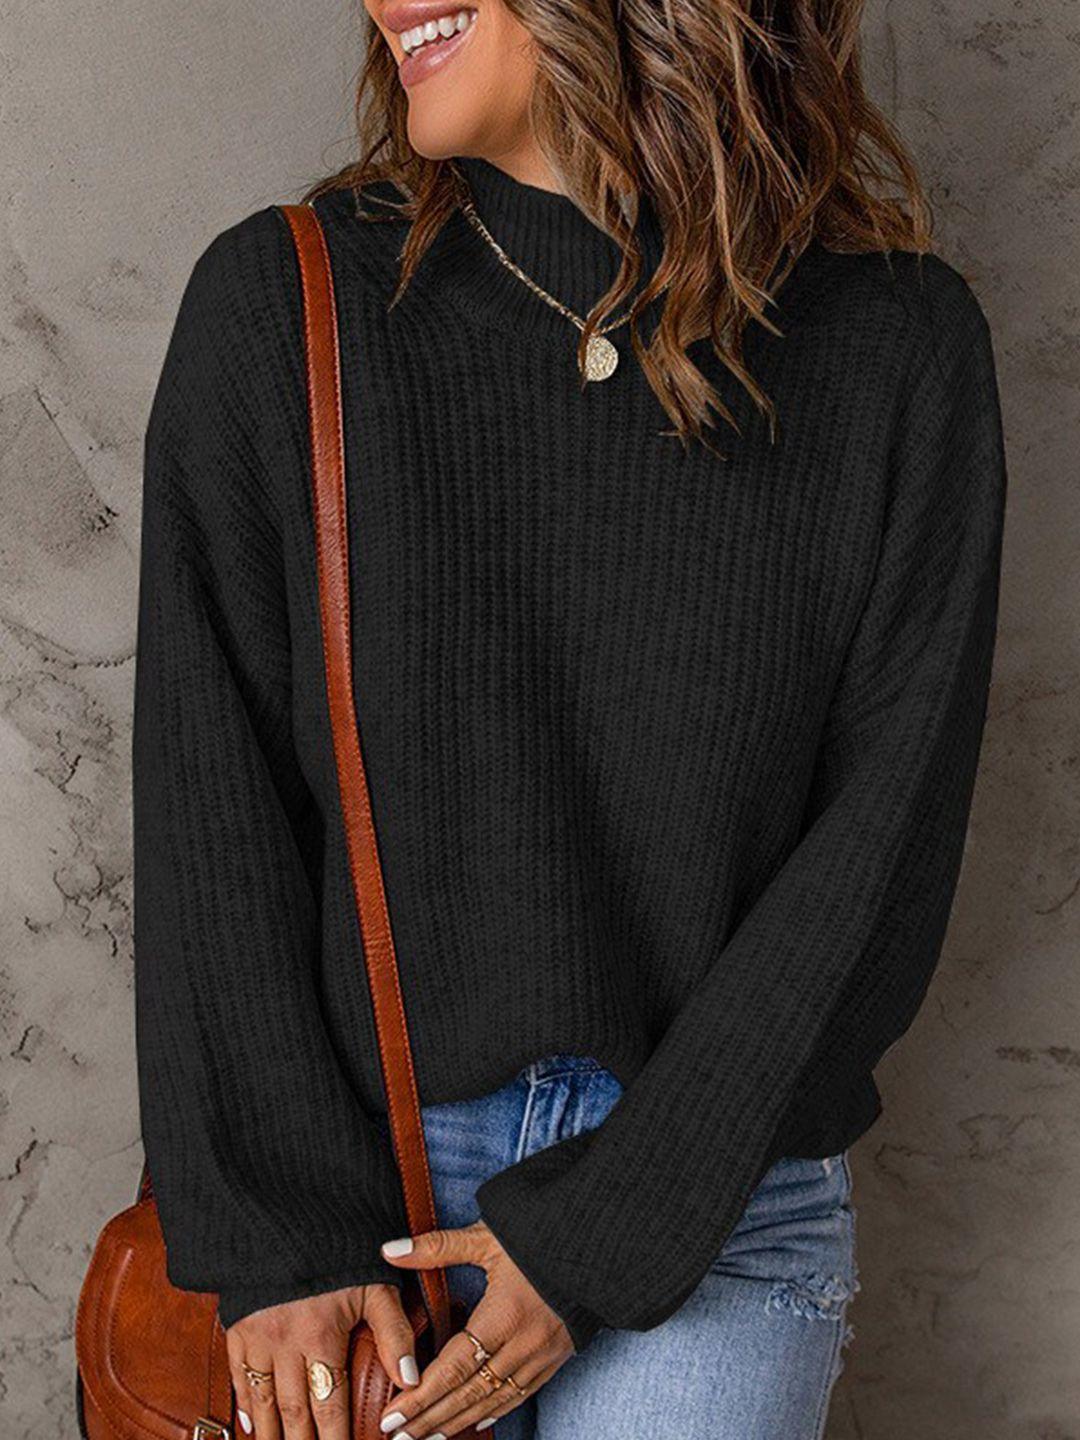 stylecast-women-black-pullover-sweater